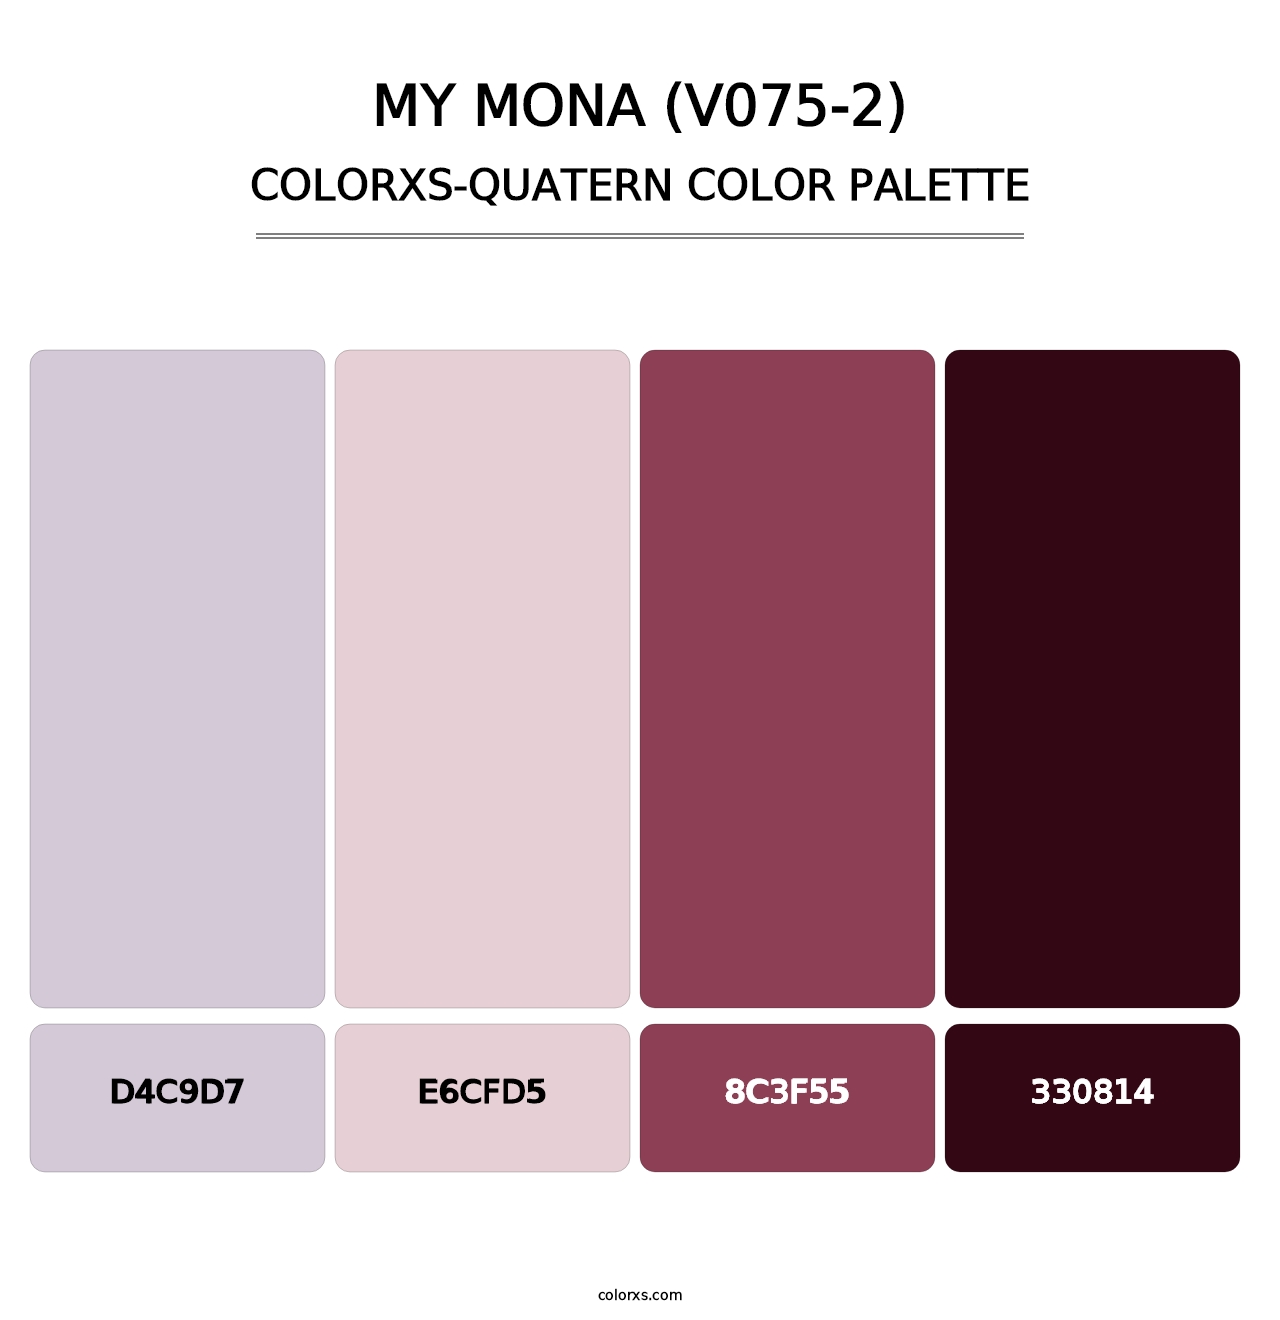 My Mona (V075-2) - Colorxs Quatern Palette